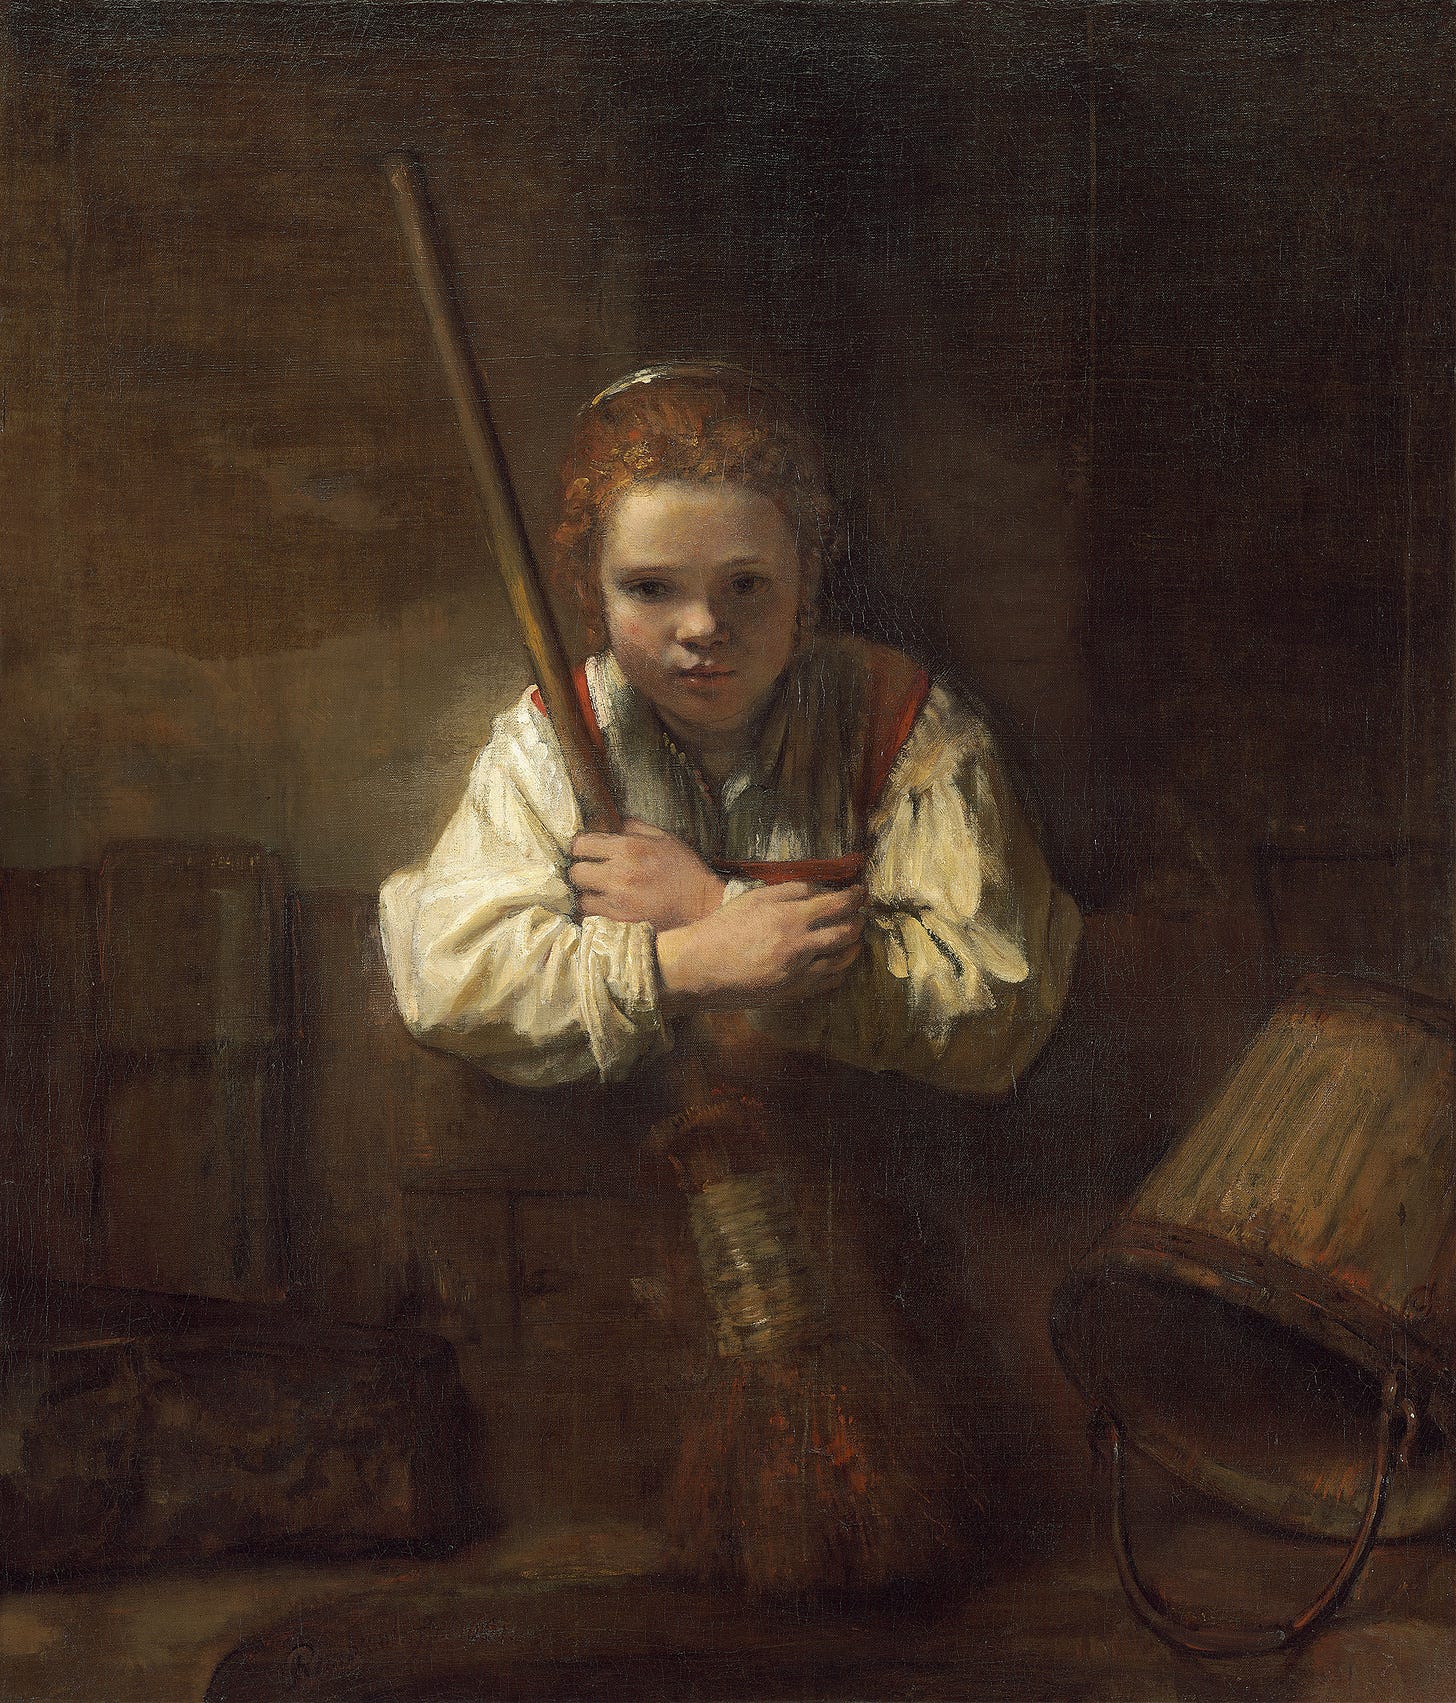 A Girl with a Broom (1646-1651) by Rembrandt van Rijn